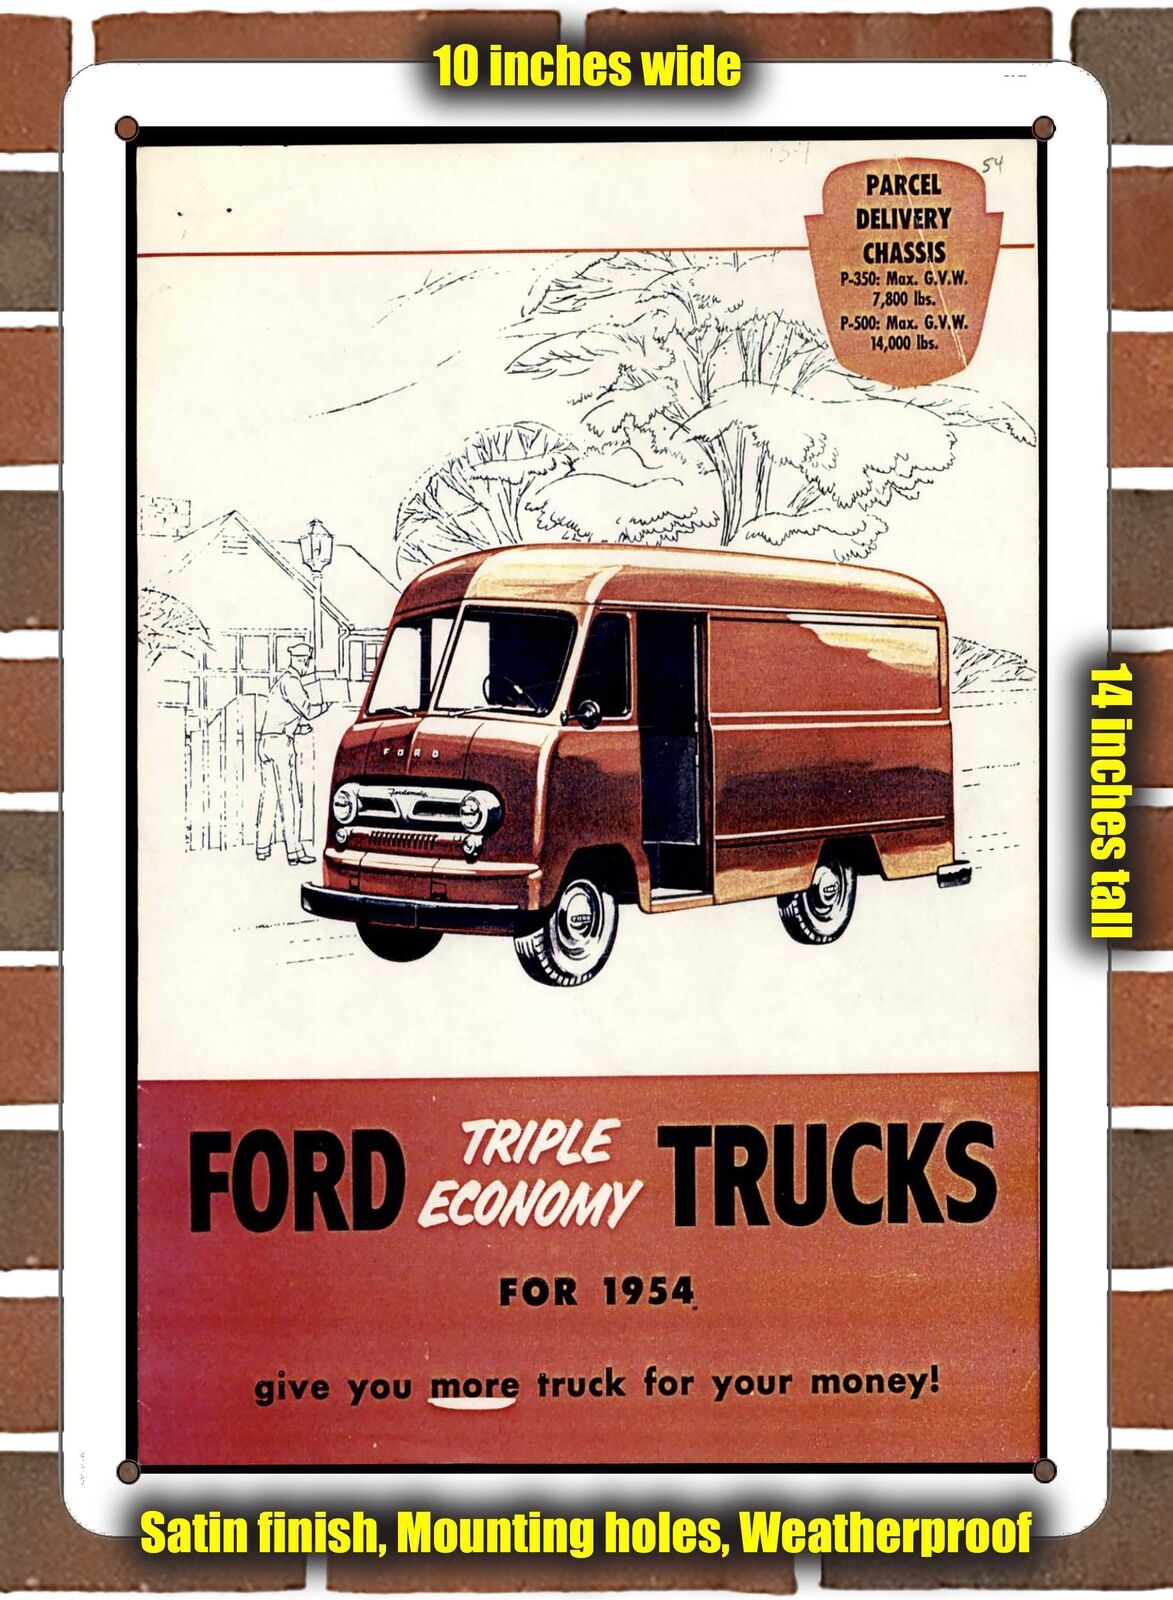 METAL SIGN - 1954 Ford Parcel Delivery